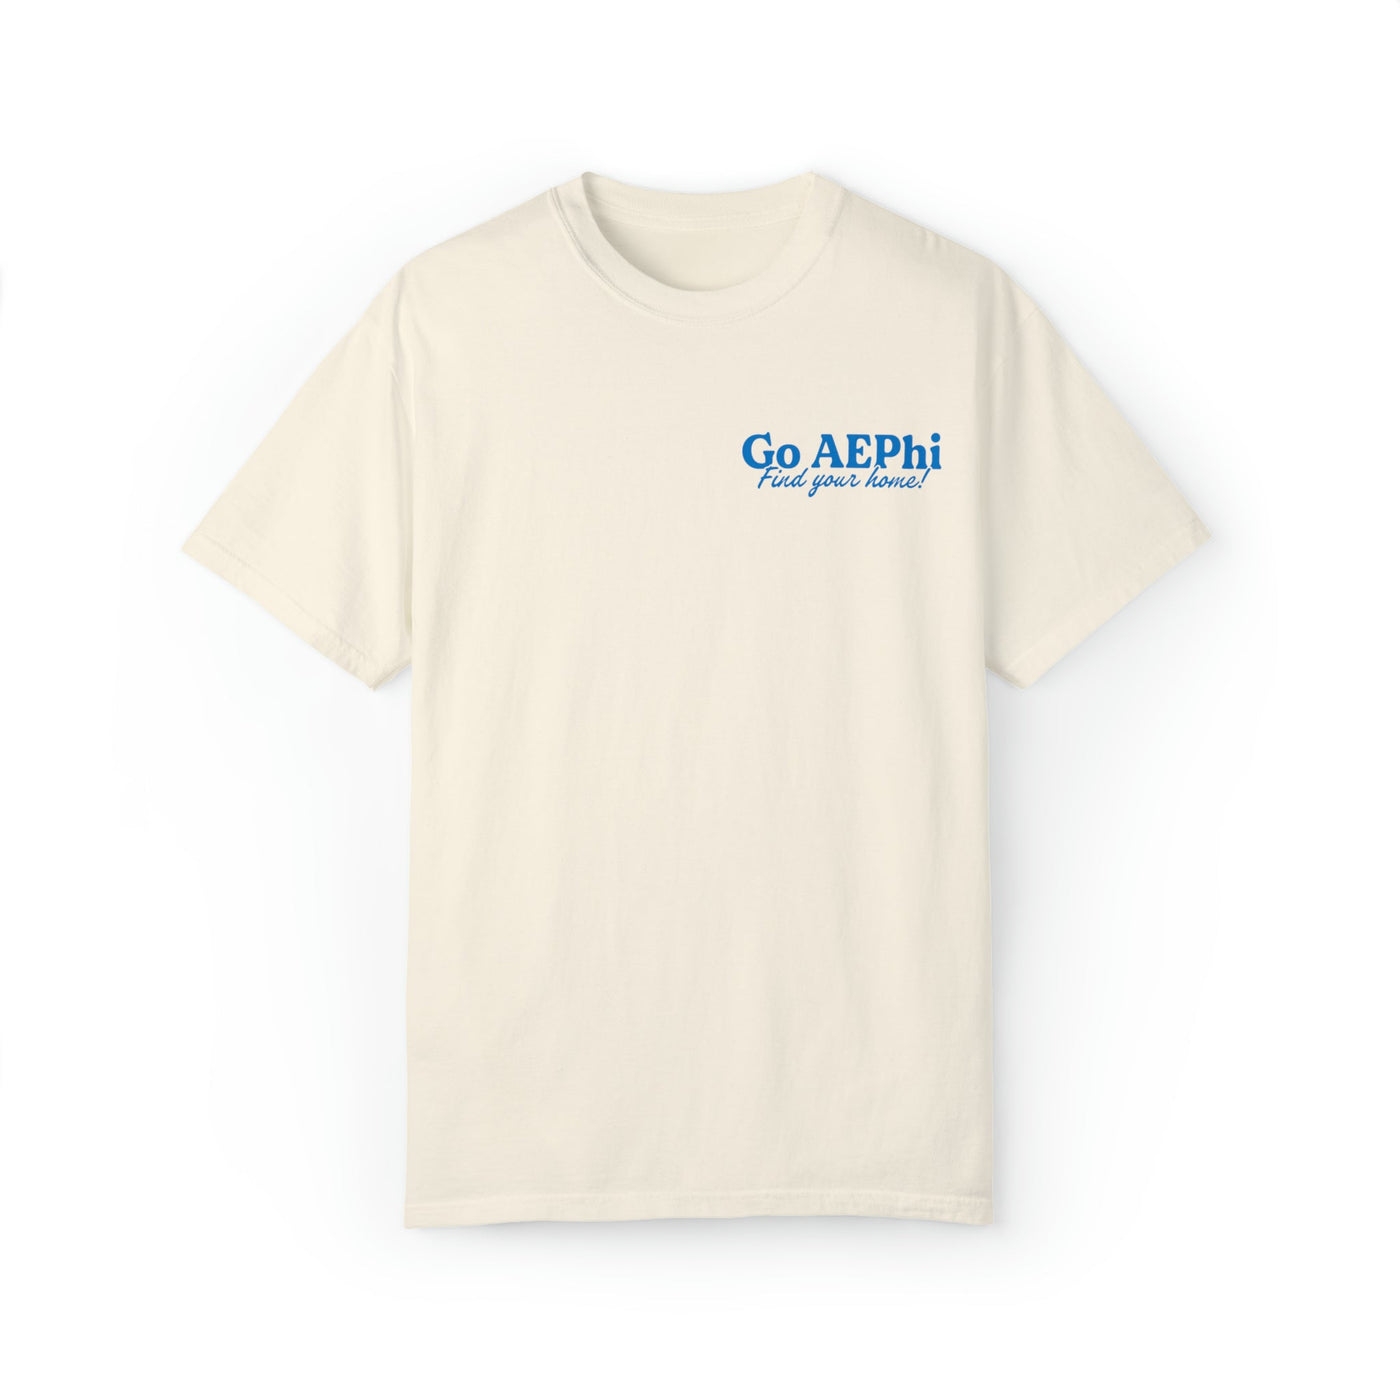 Alpha Epsilon Phi Teddy Bear Sorority T-shirt